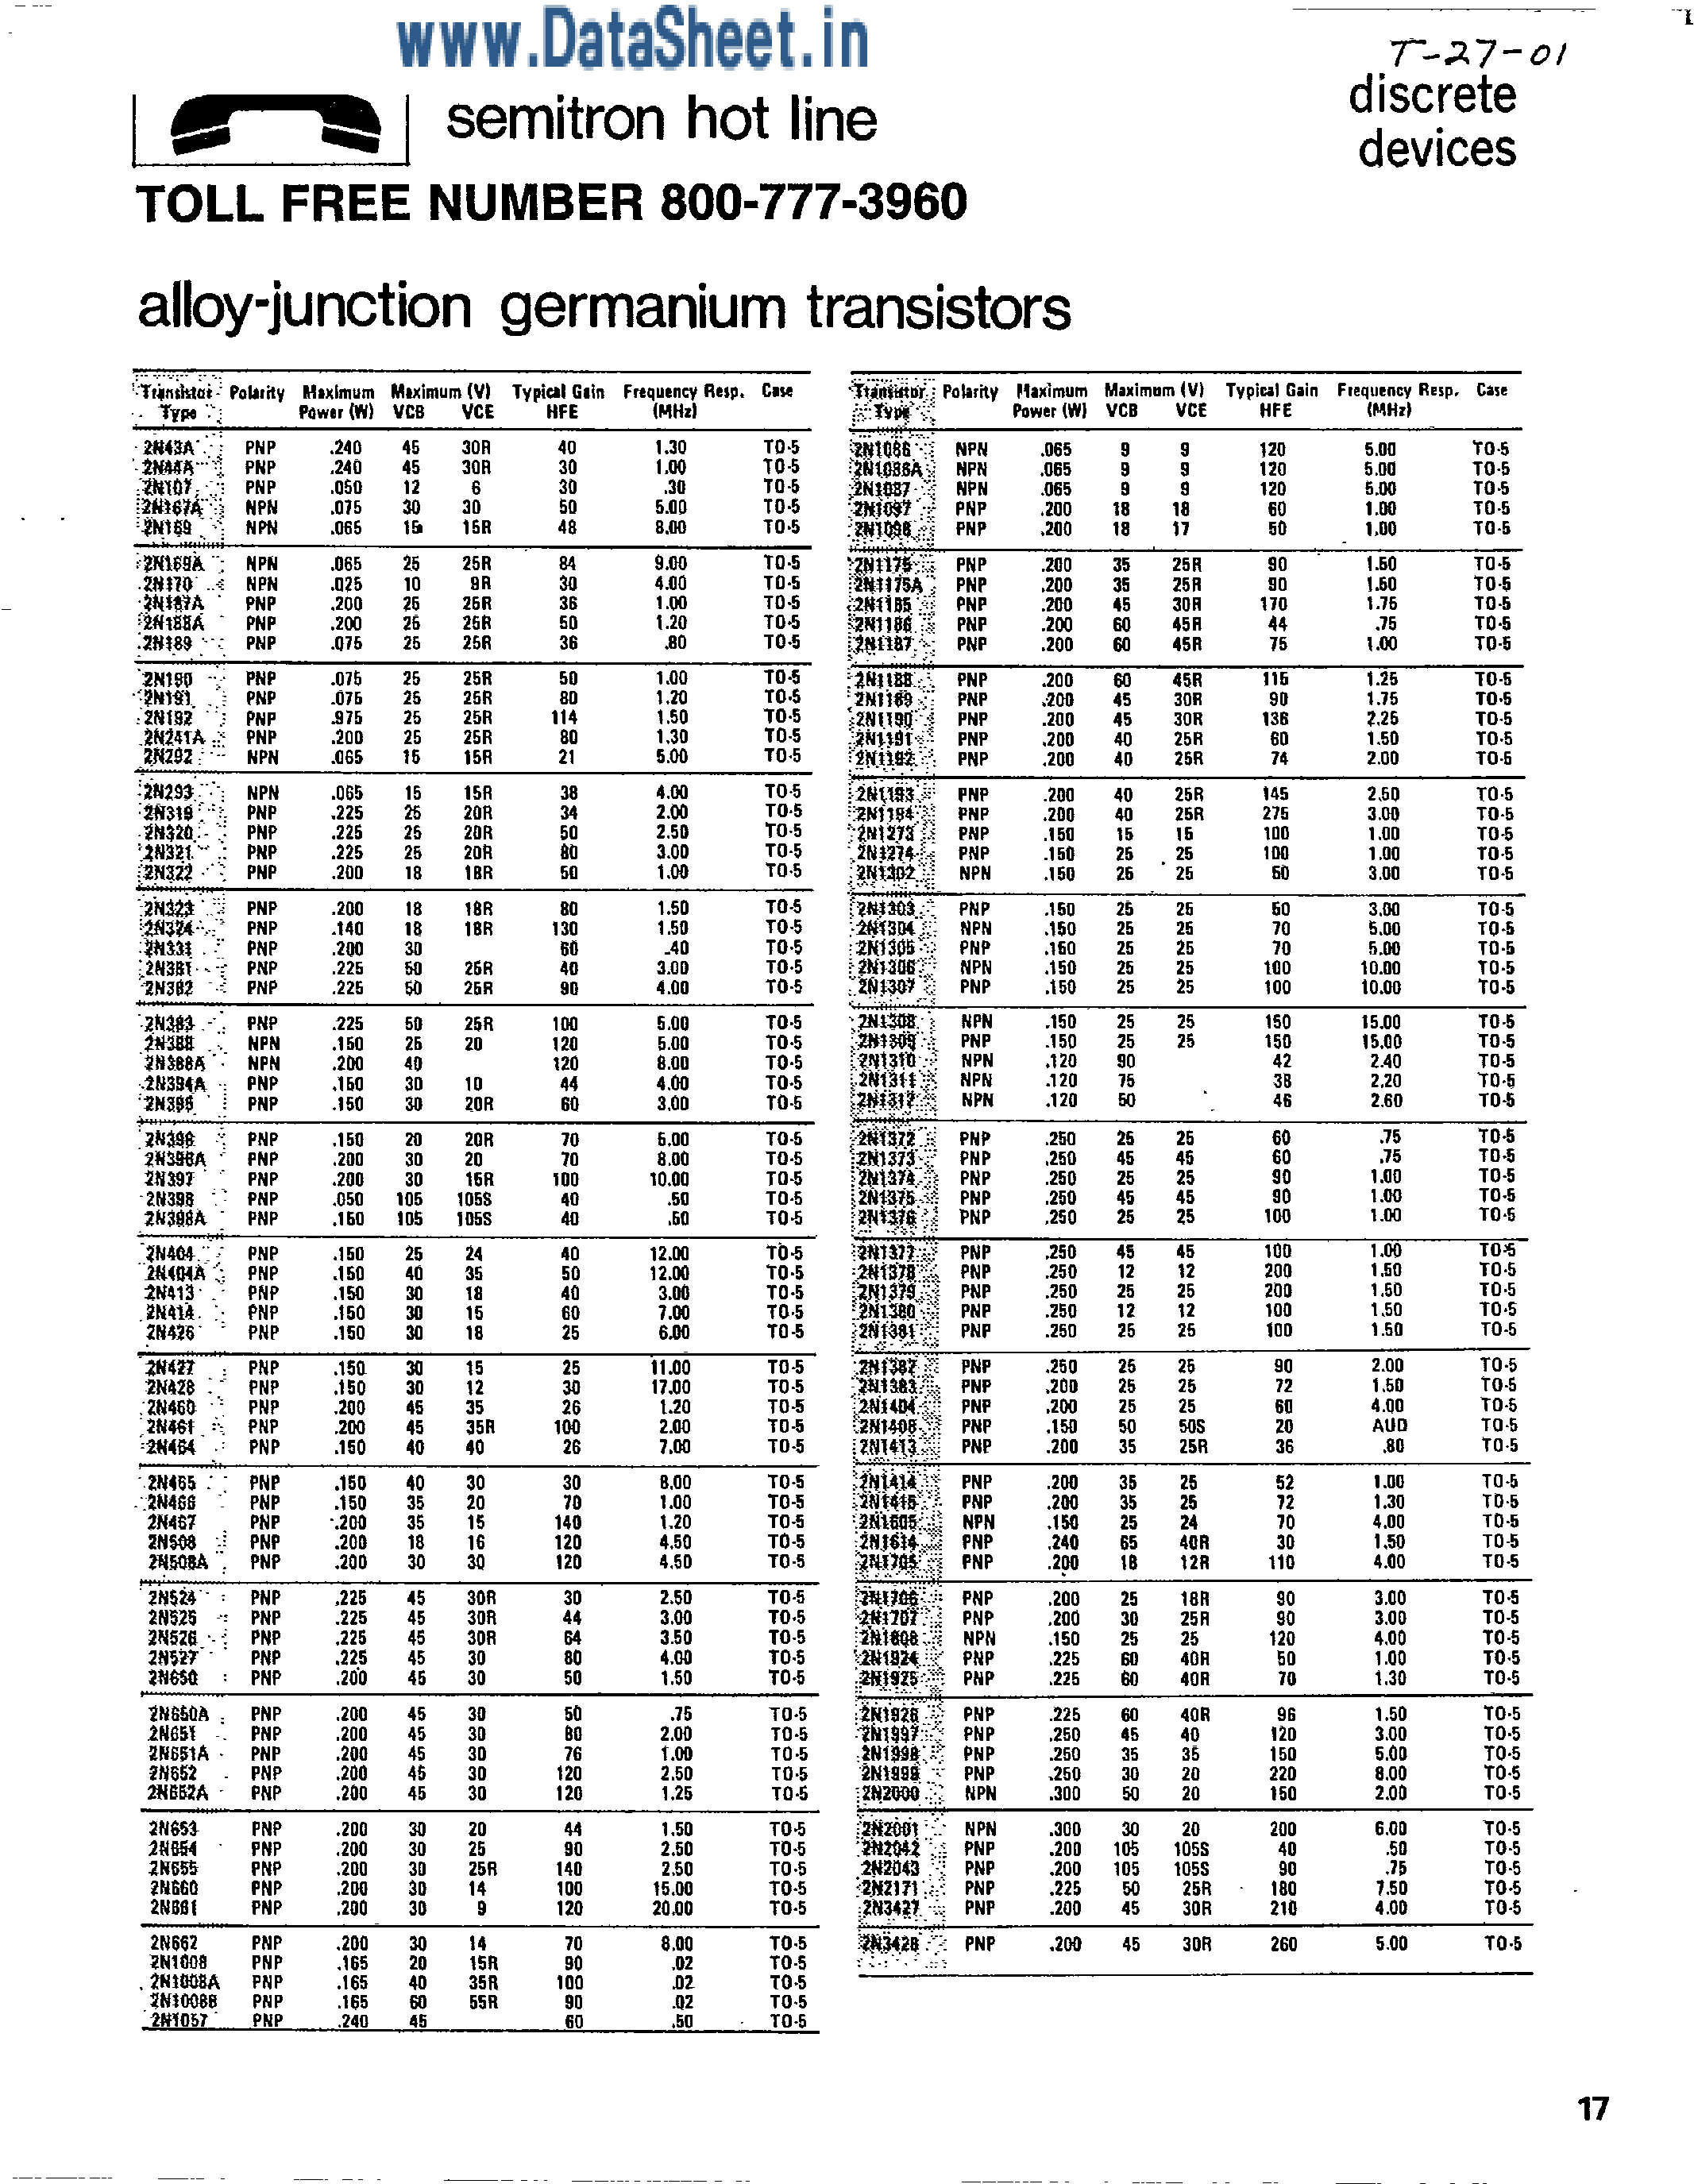 Даташит 2N169 - Alloy Junction Germanium Transistors страница 1